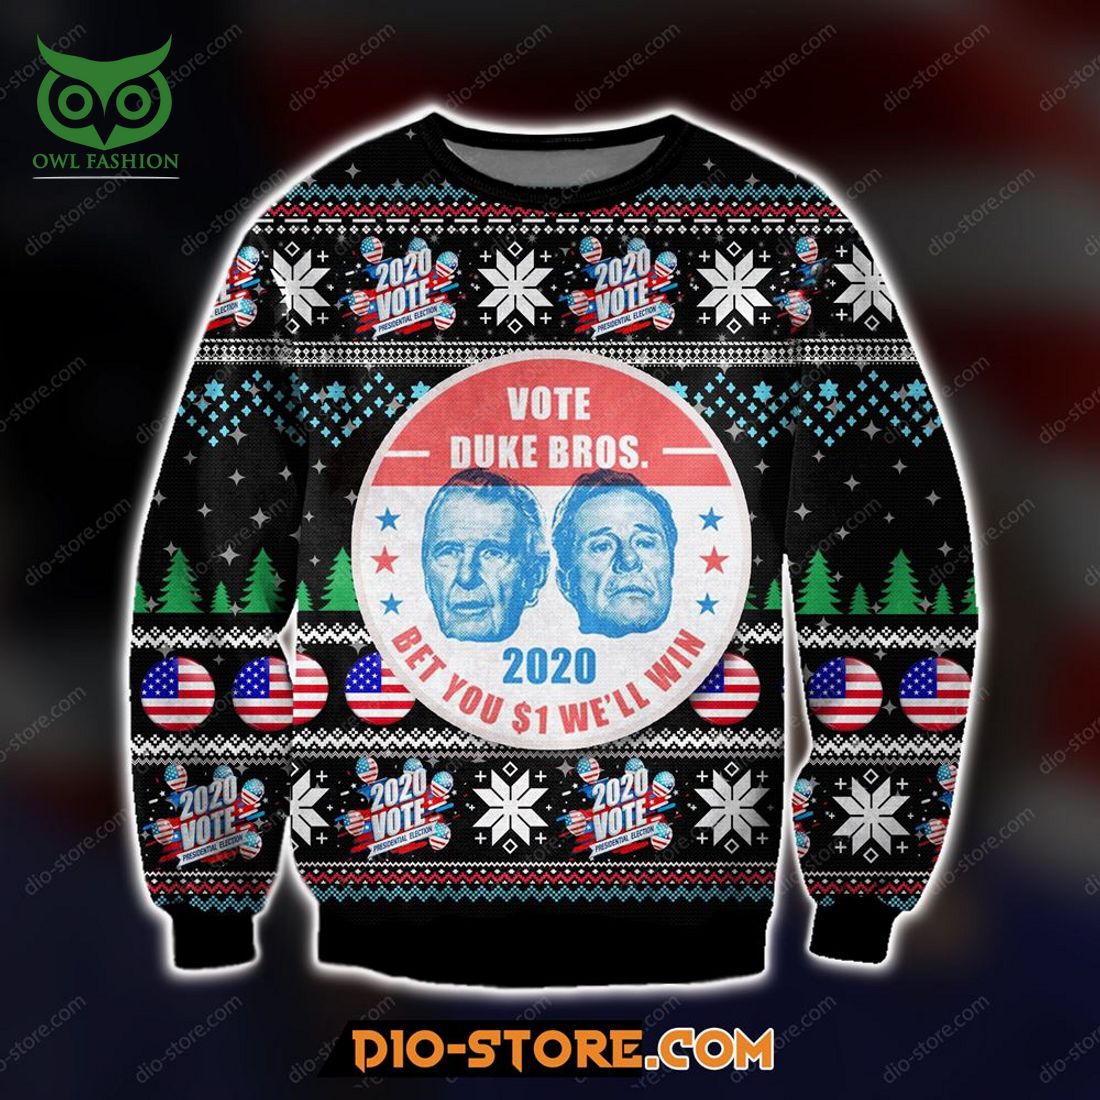 vote duke bros 2020 3d print ugly christmas sweater sweatshirt christmas 1 iC7kl